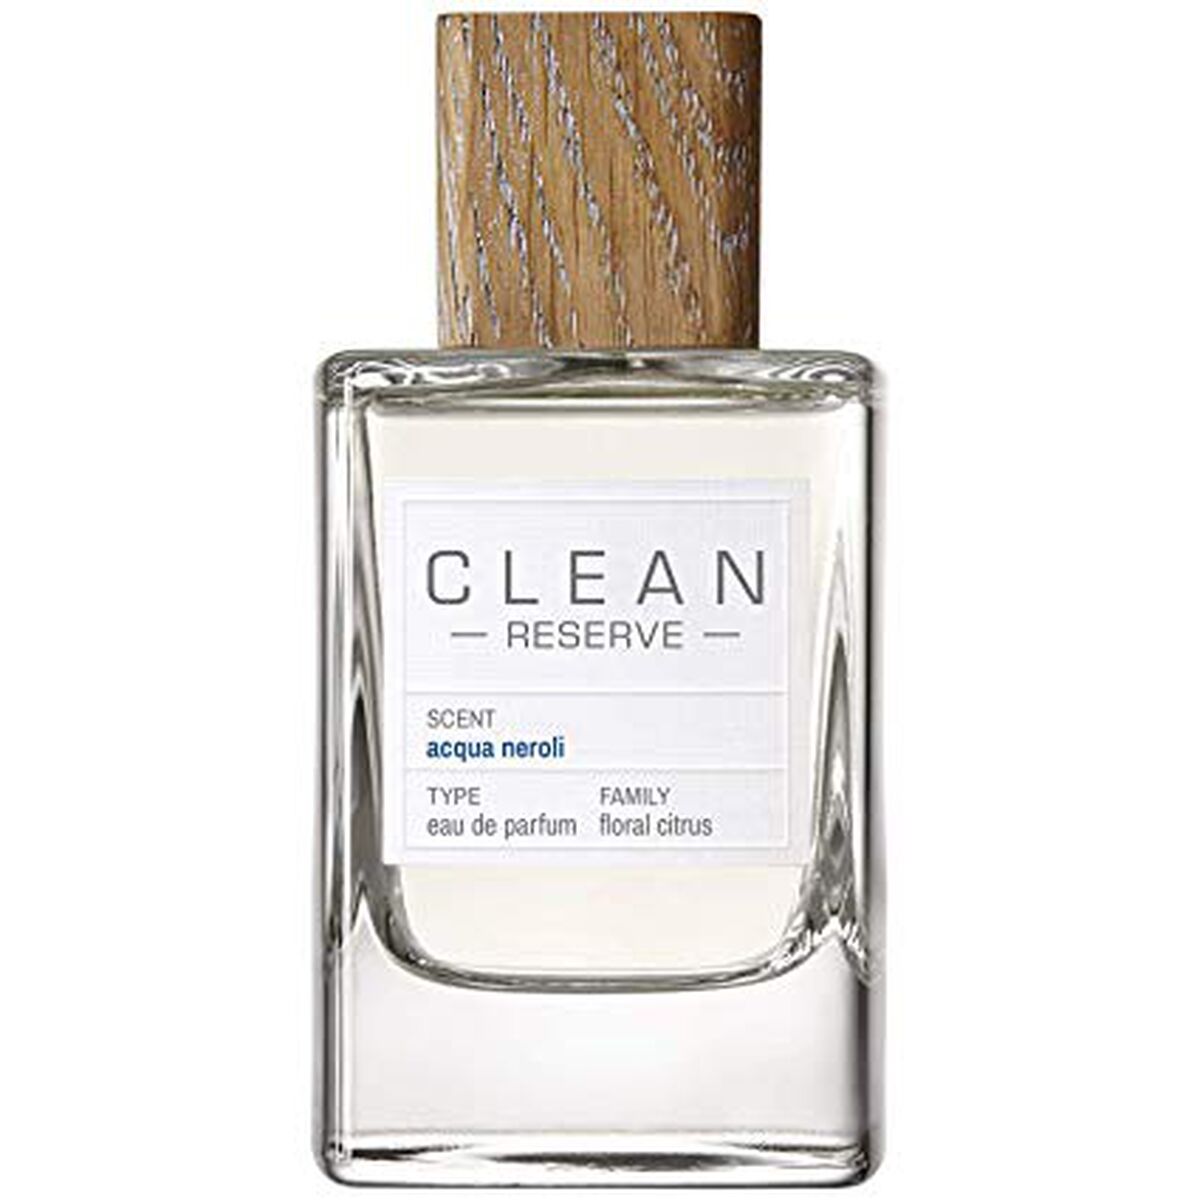 Perfume unissex limpo acqua neroli edp 100 ml